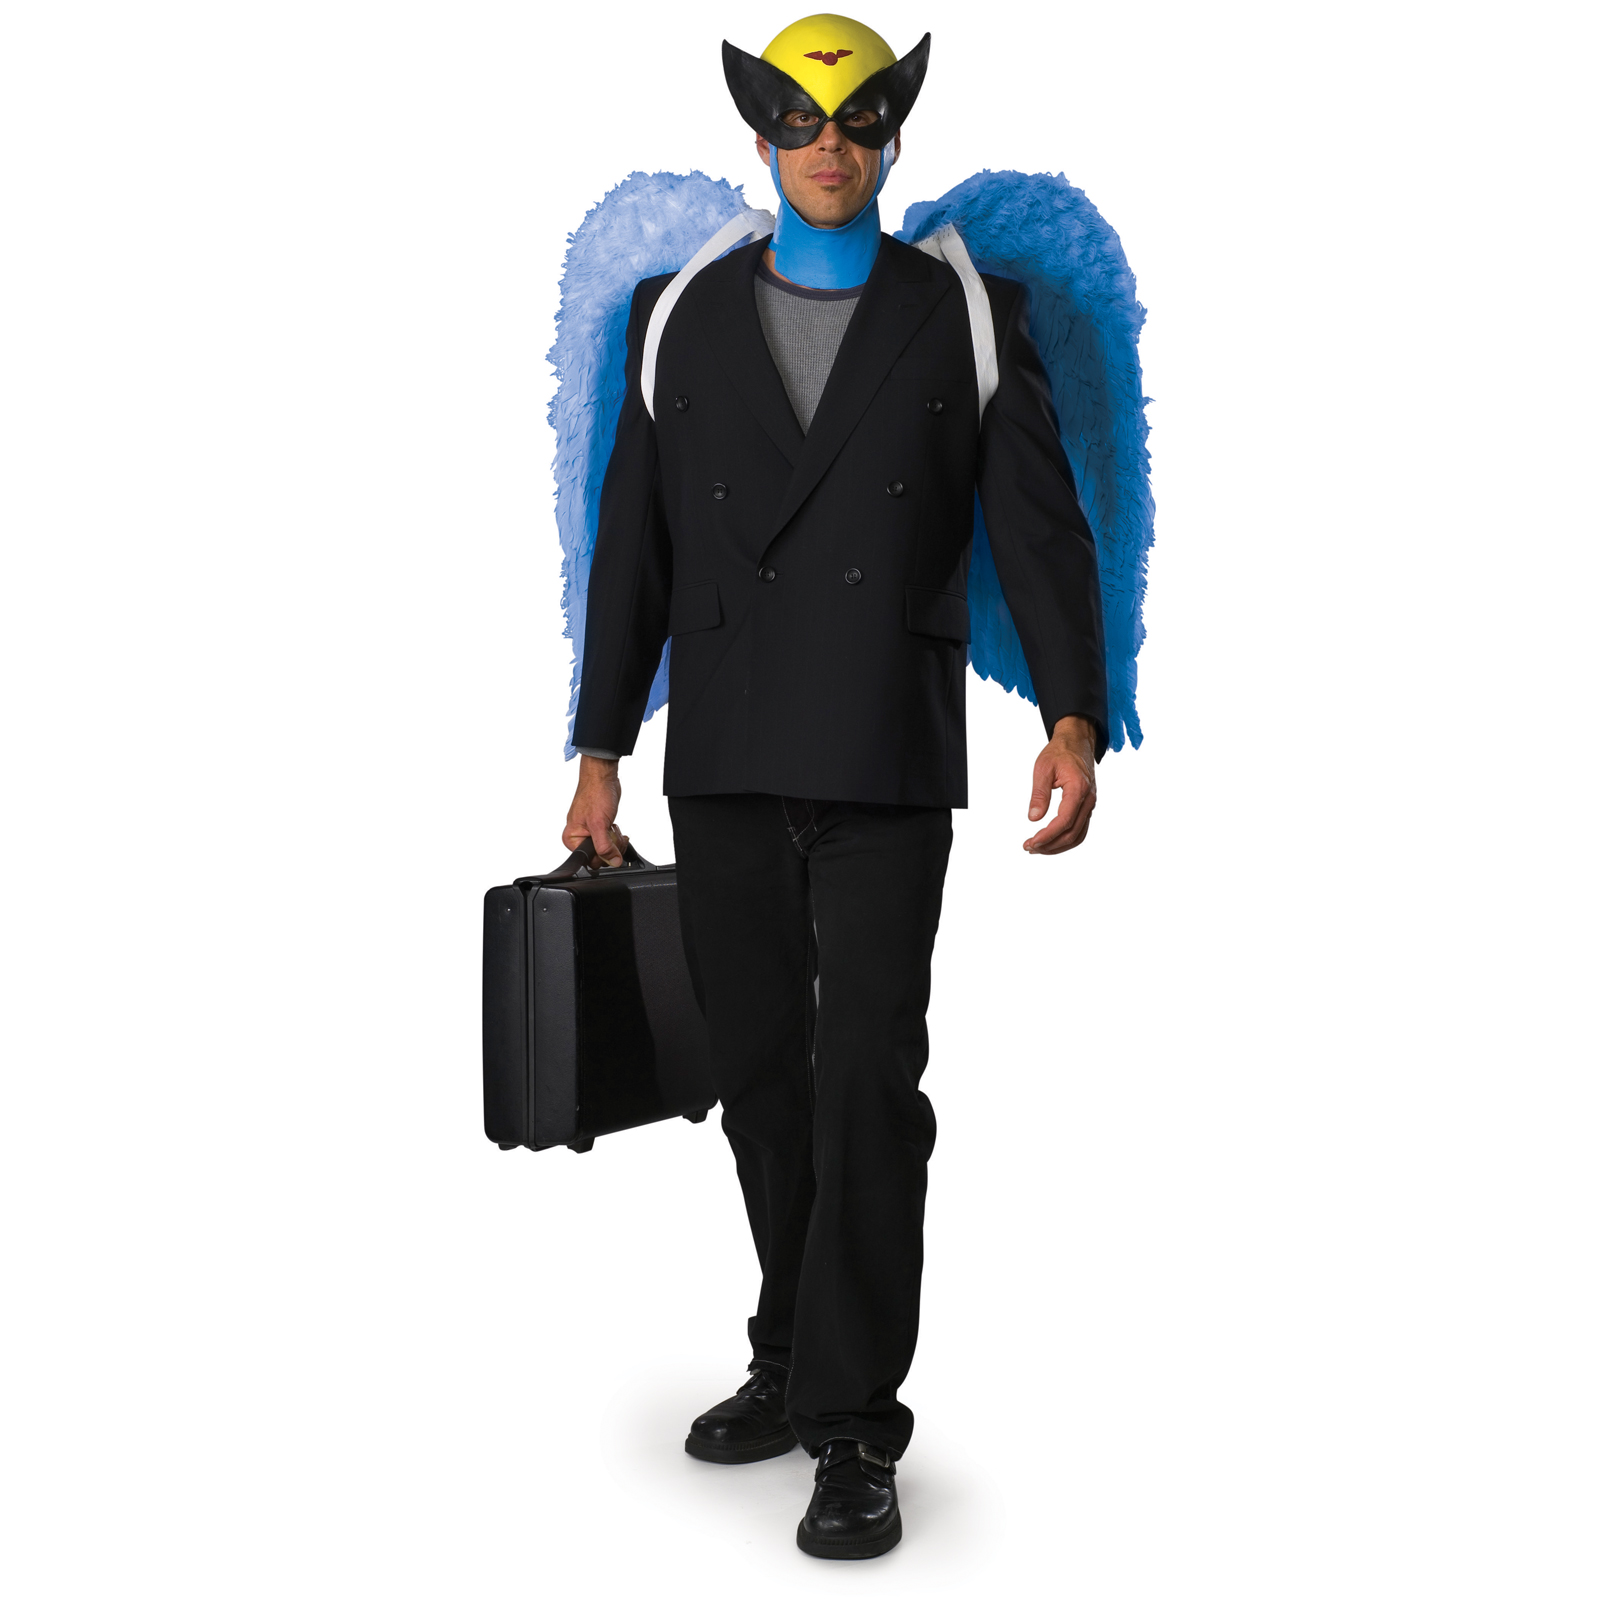 Rubie's Costume Co Men's Harvey Birdman Costume - Standard One-Size